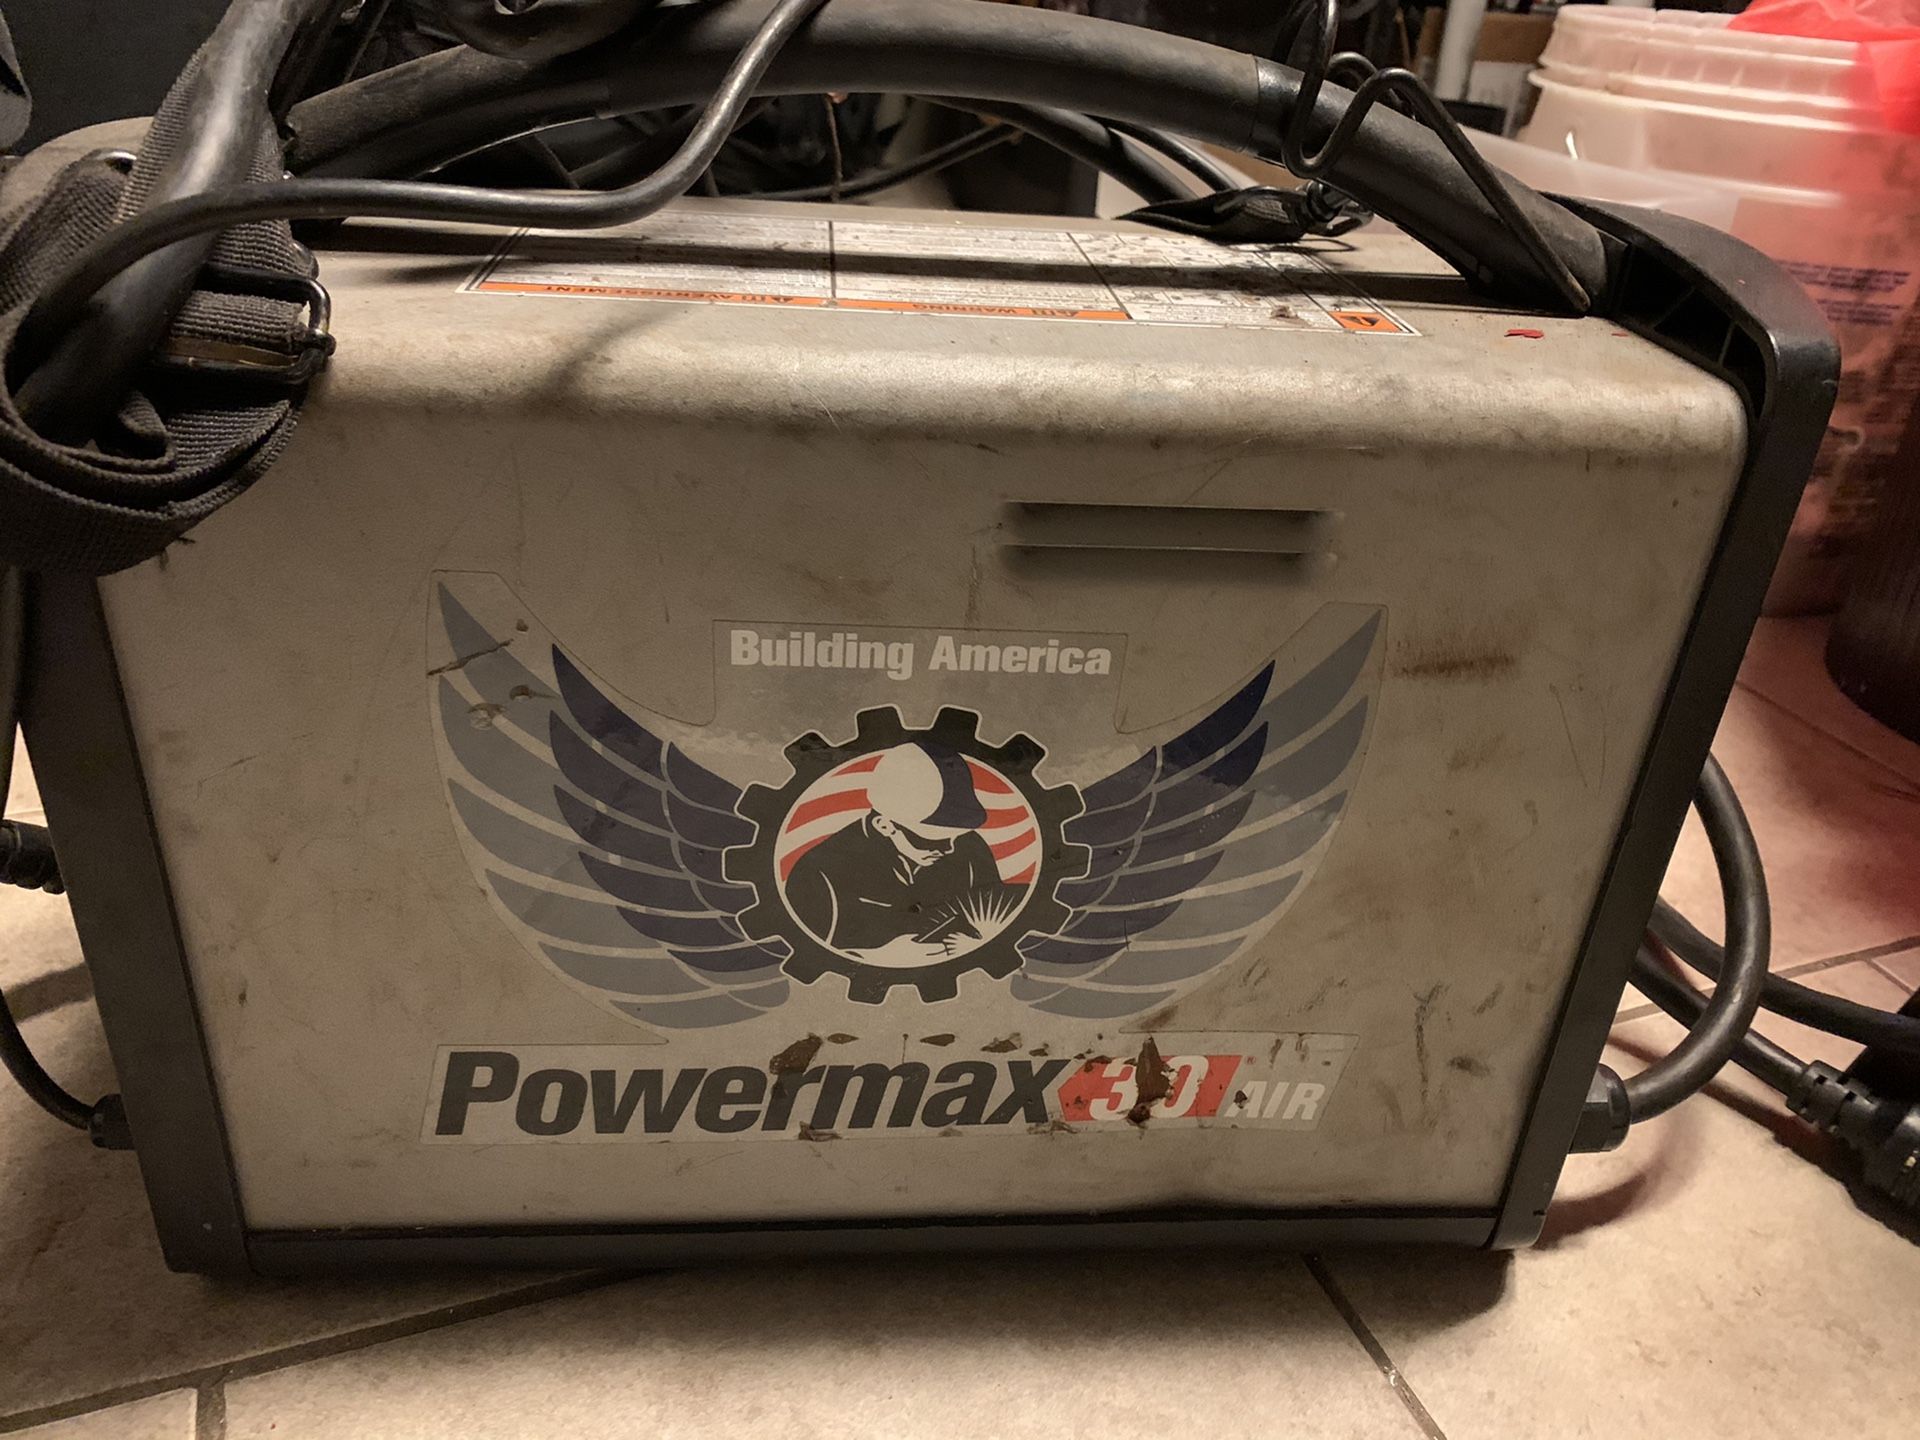 Powermax 30 air plasma cutter